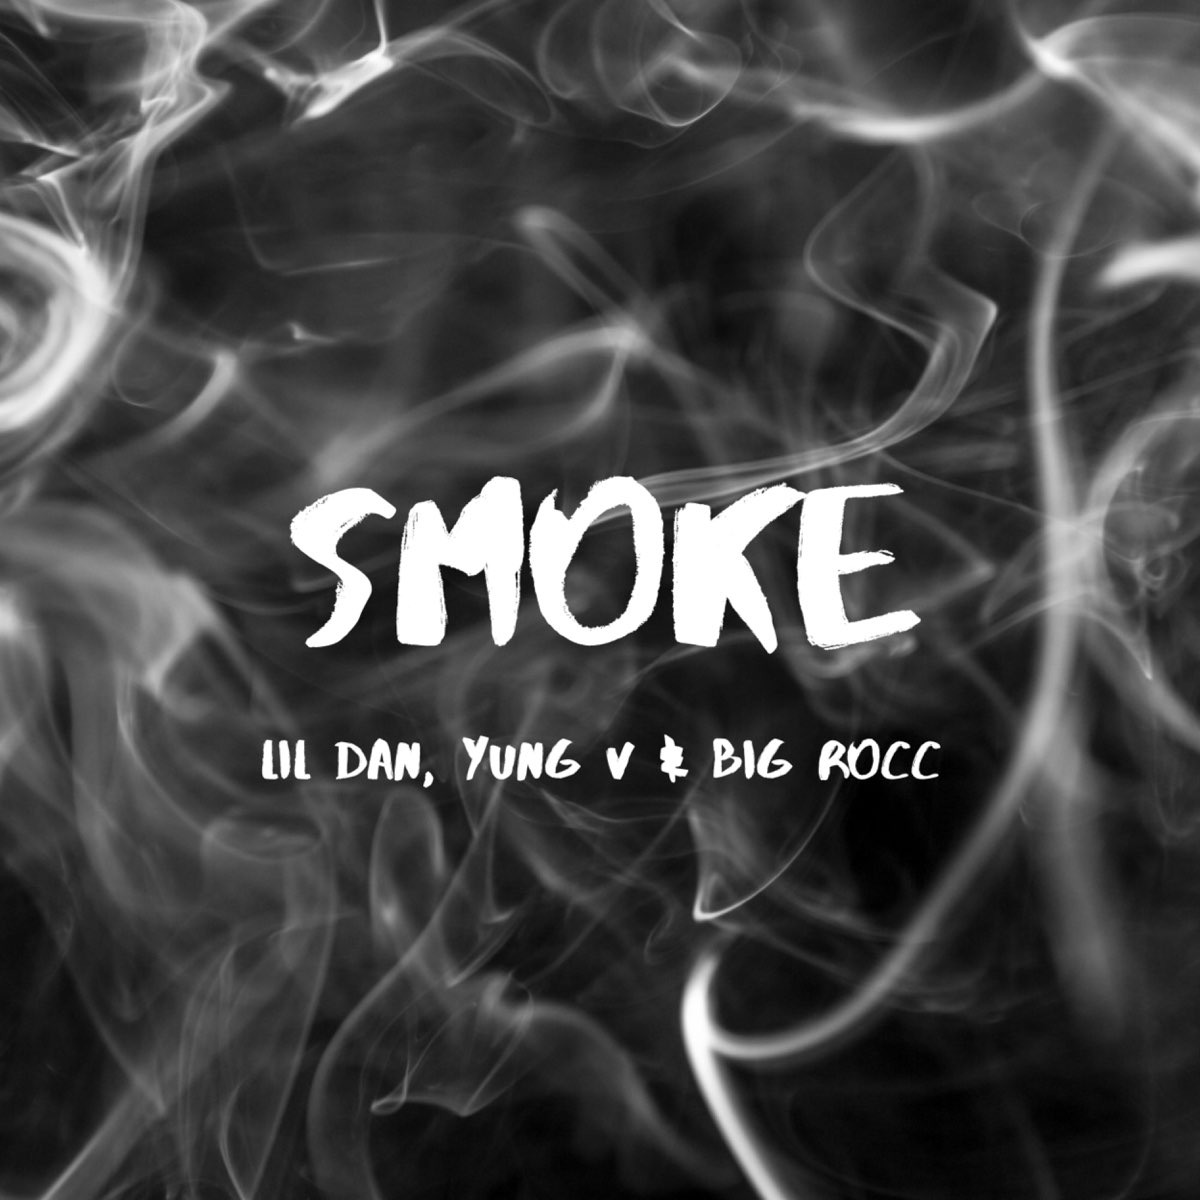 Smoke трек. Smoke песня. Lil Smoke. Smoke it off обложка. Смоке песни